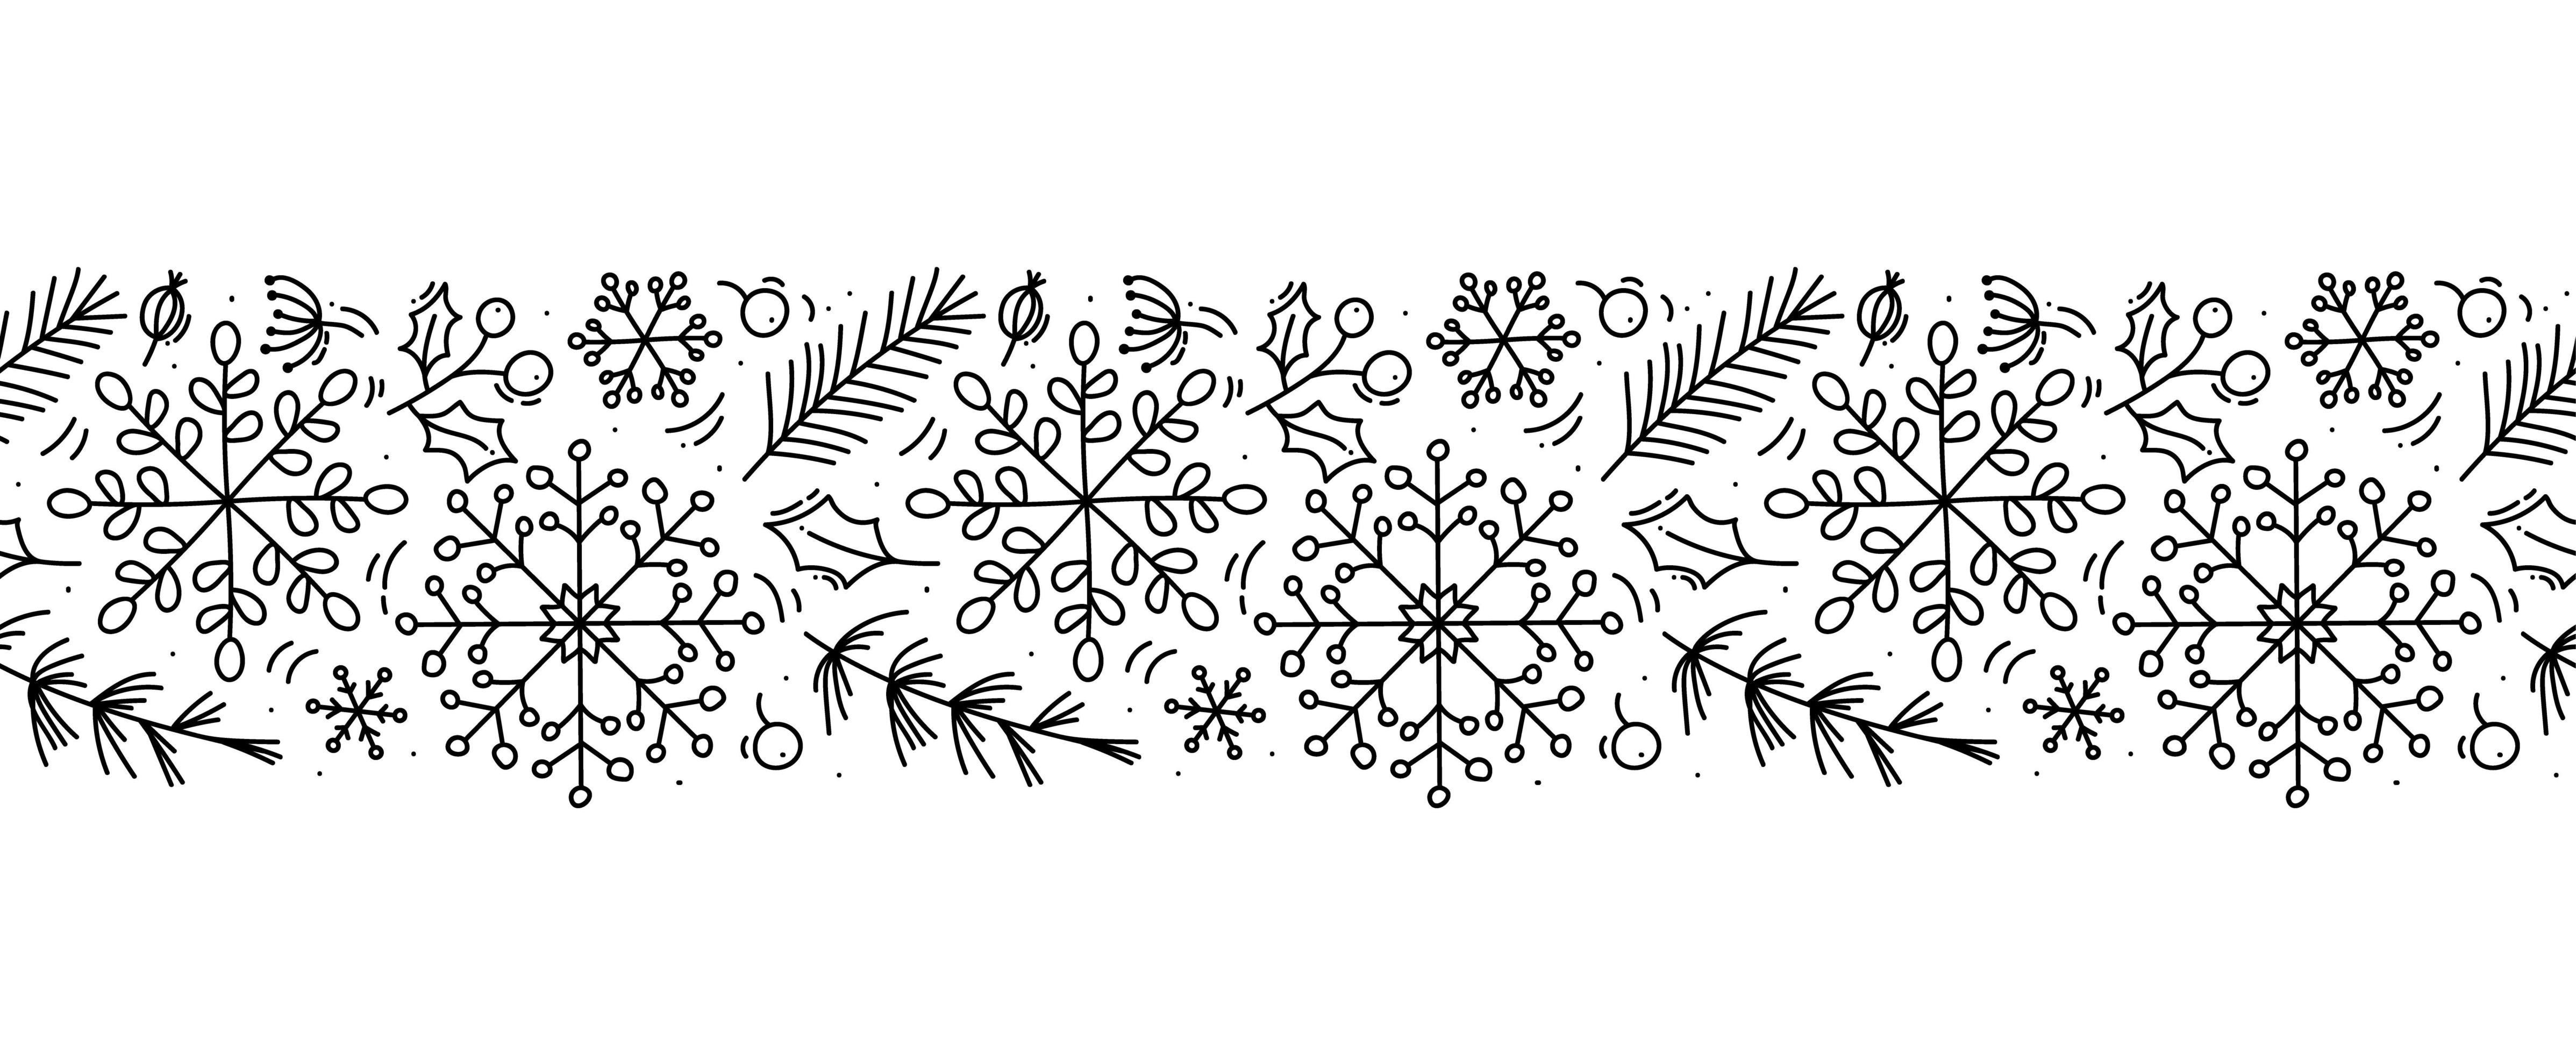 Christmas monoline scandinavian seamless pattern vector